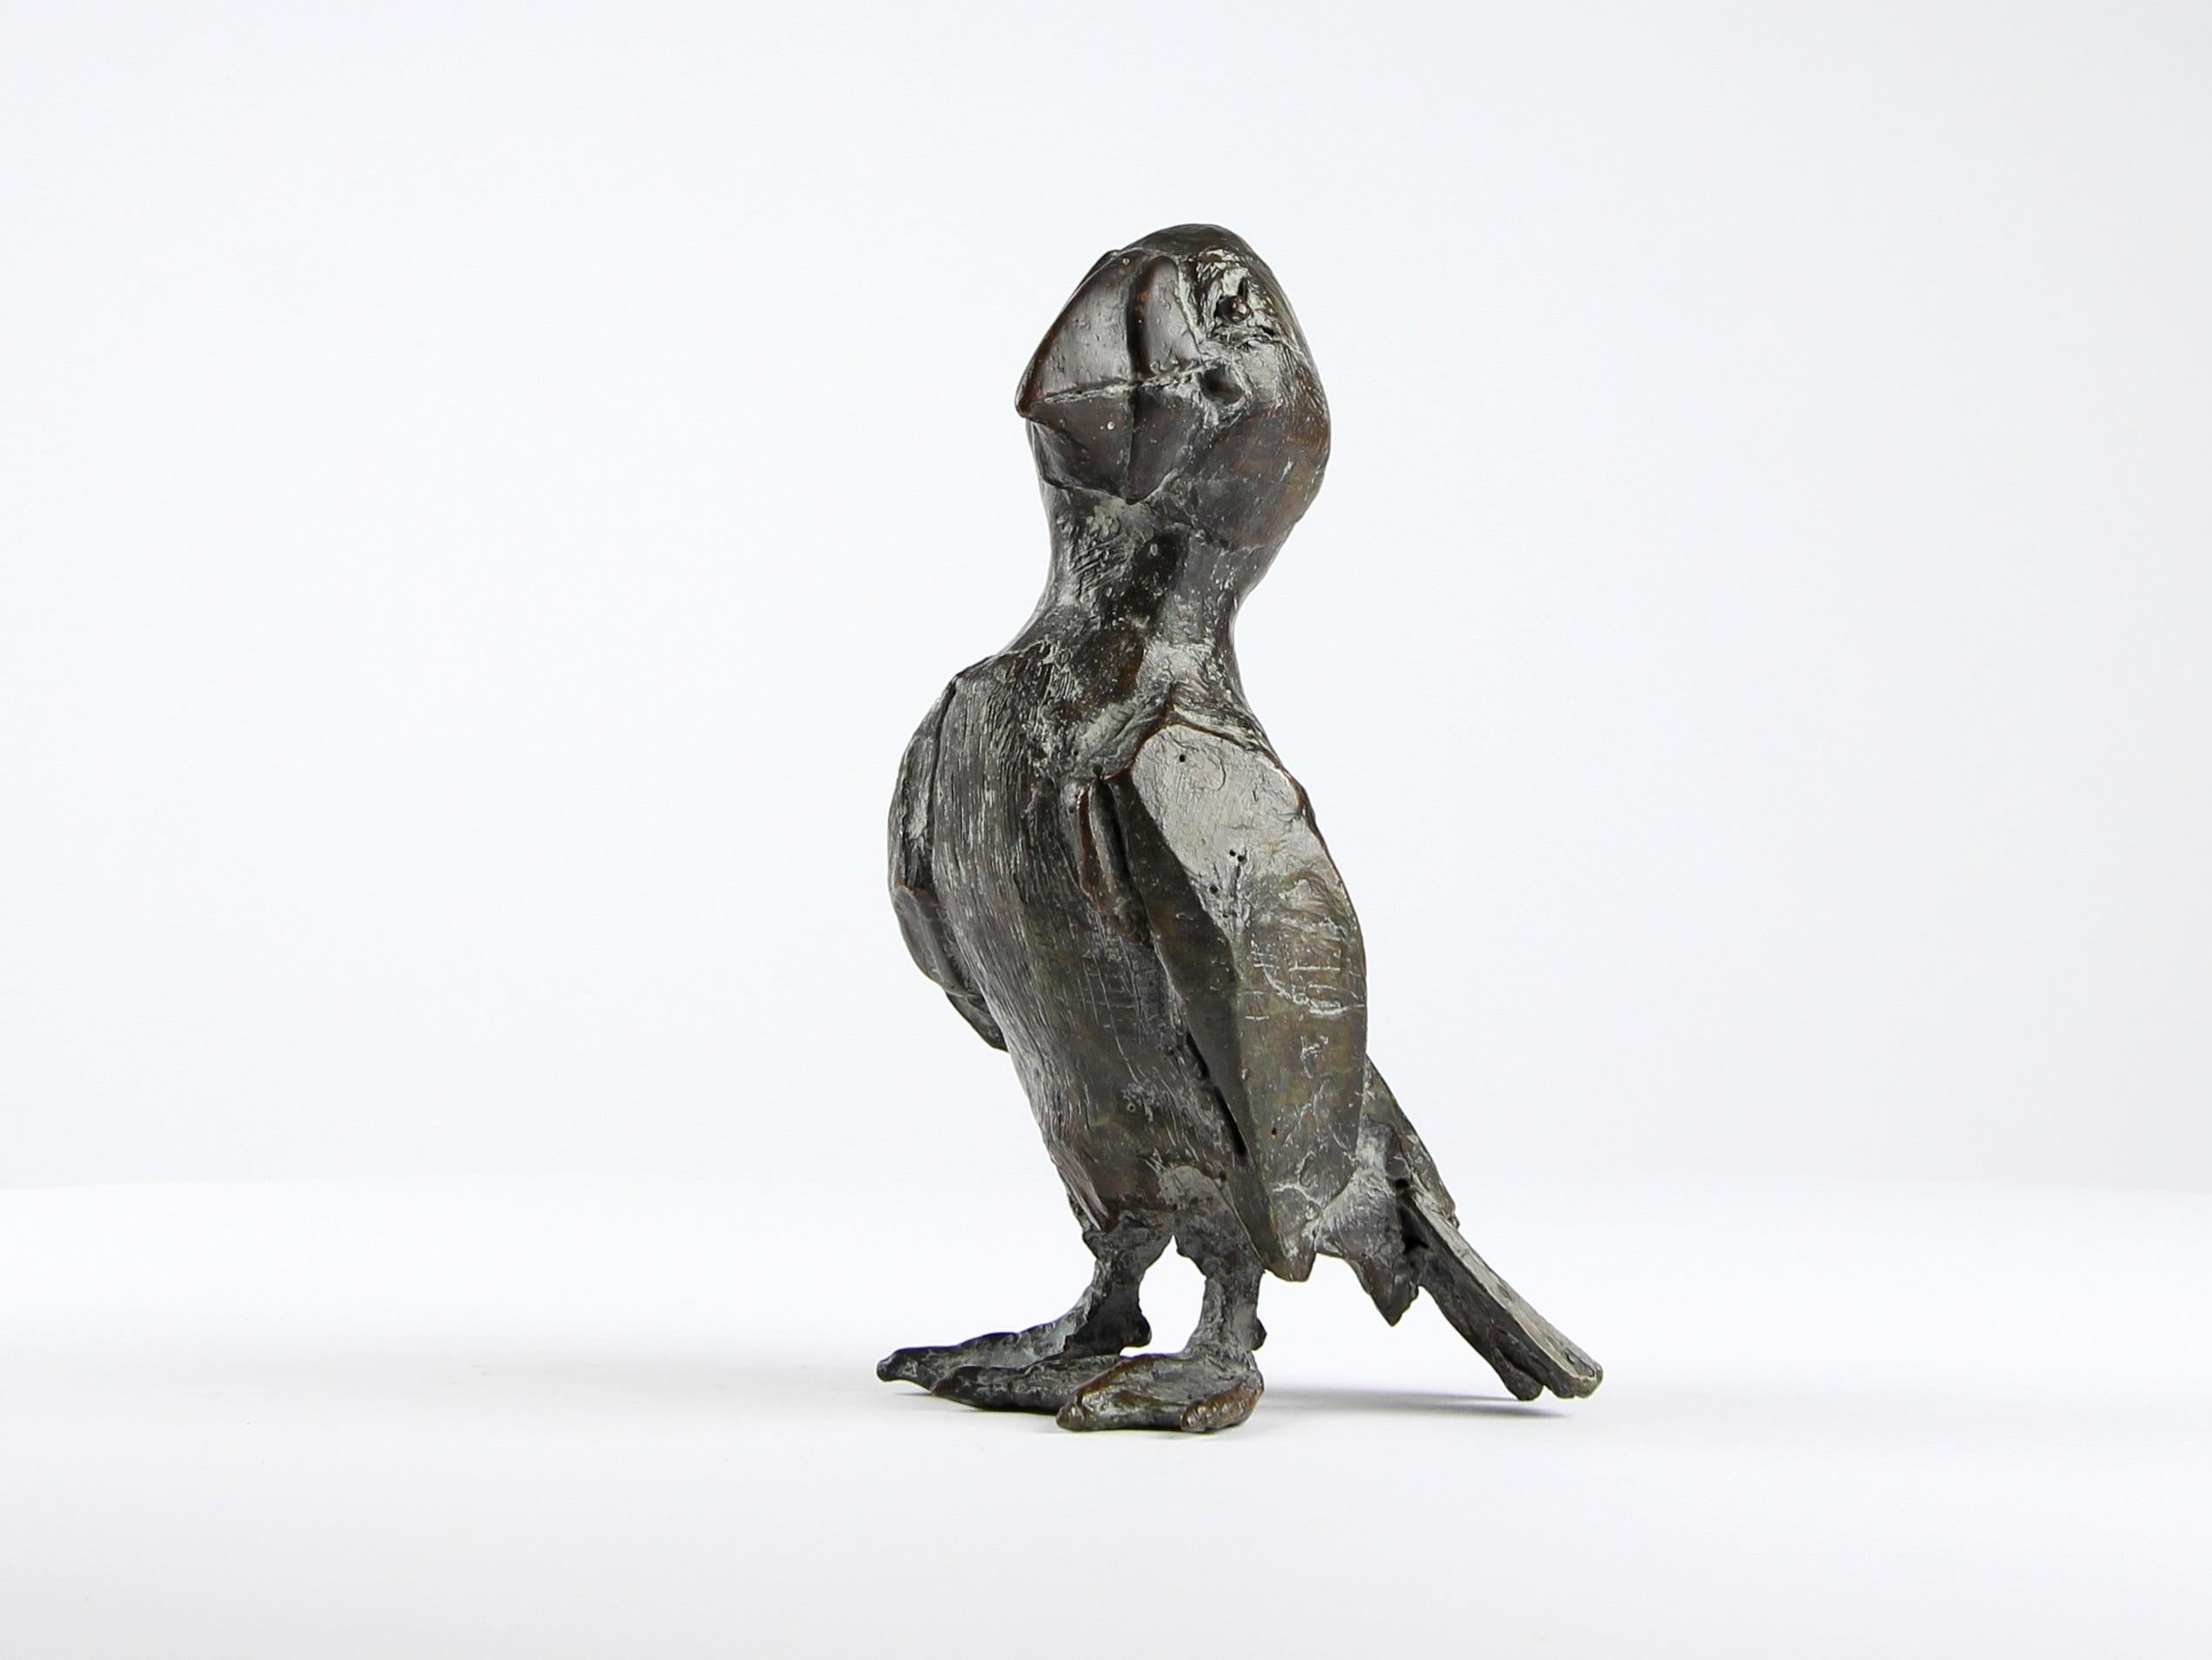 Puffin by Chésade - Bronze sculpture of a sea bird, contemporary